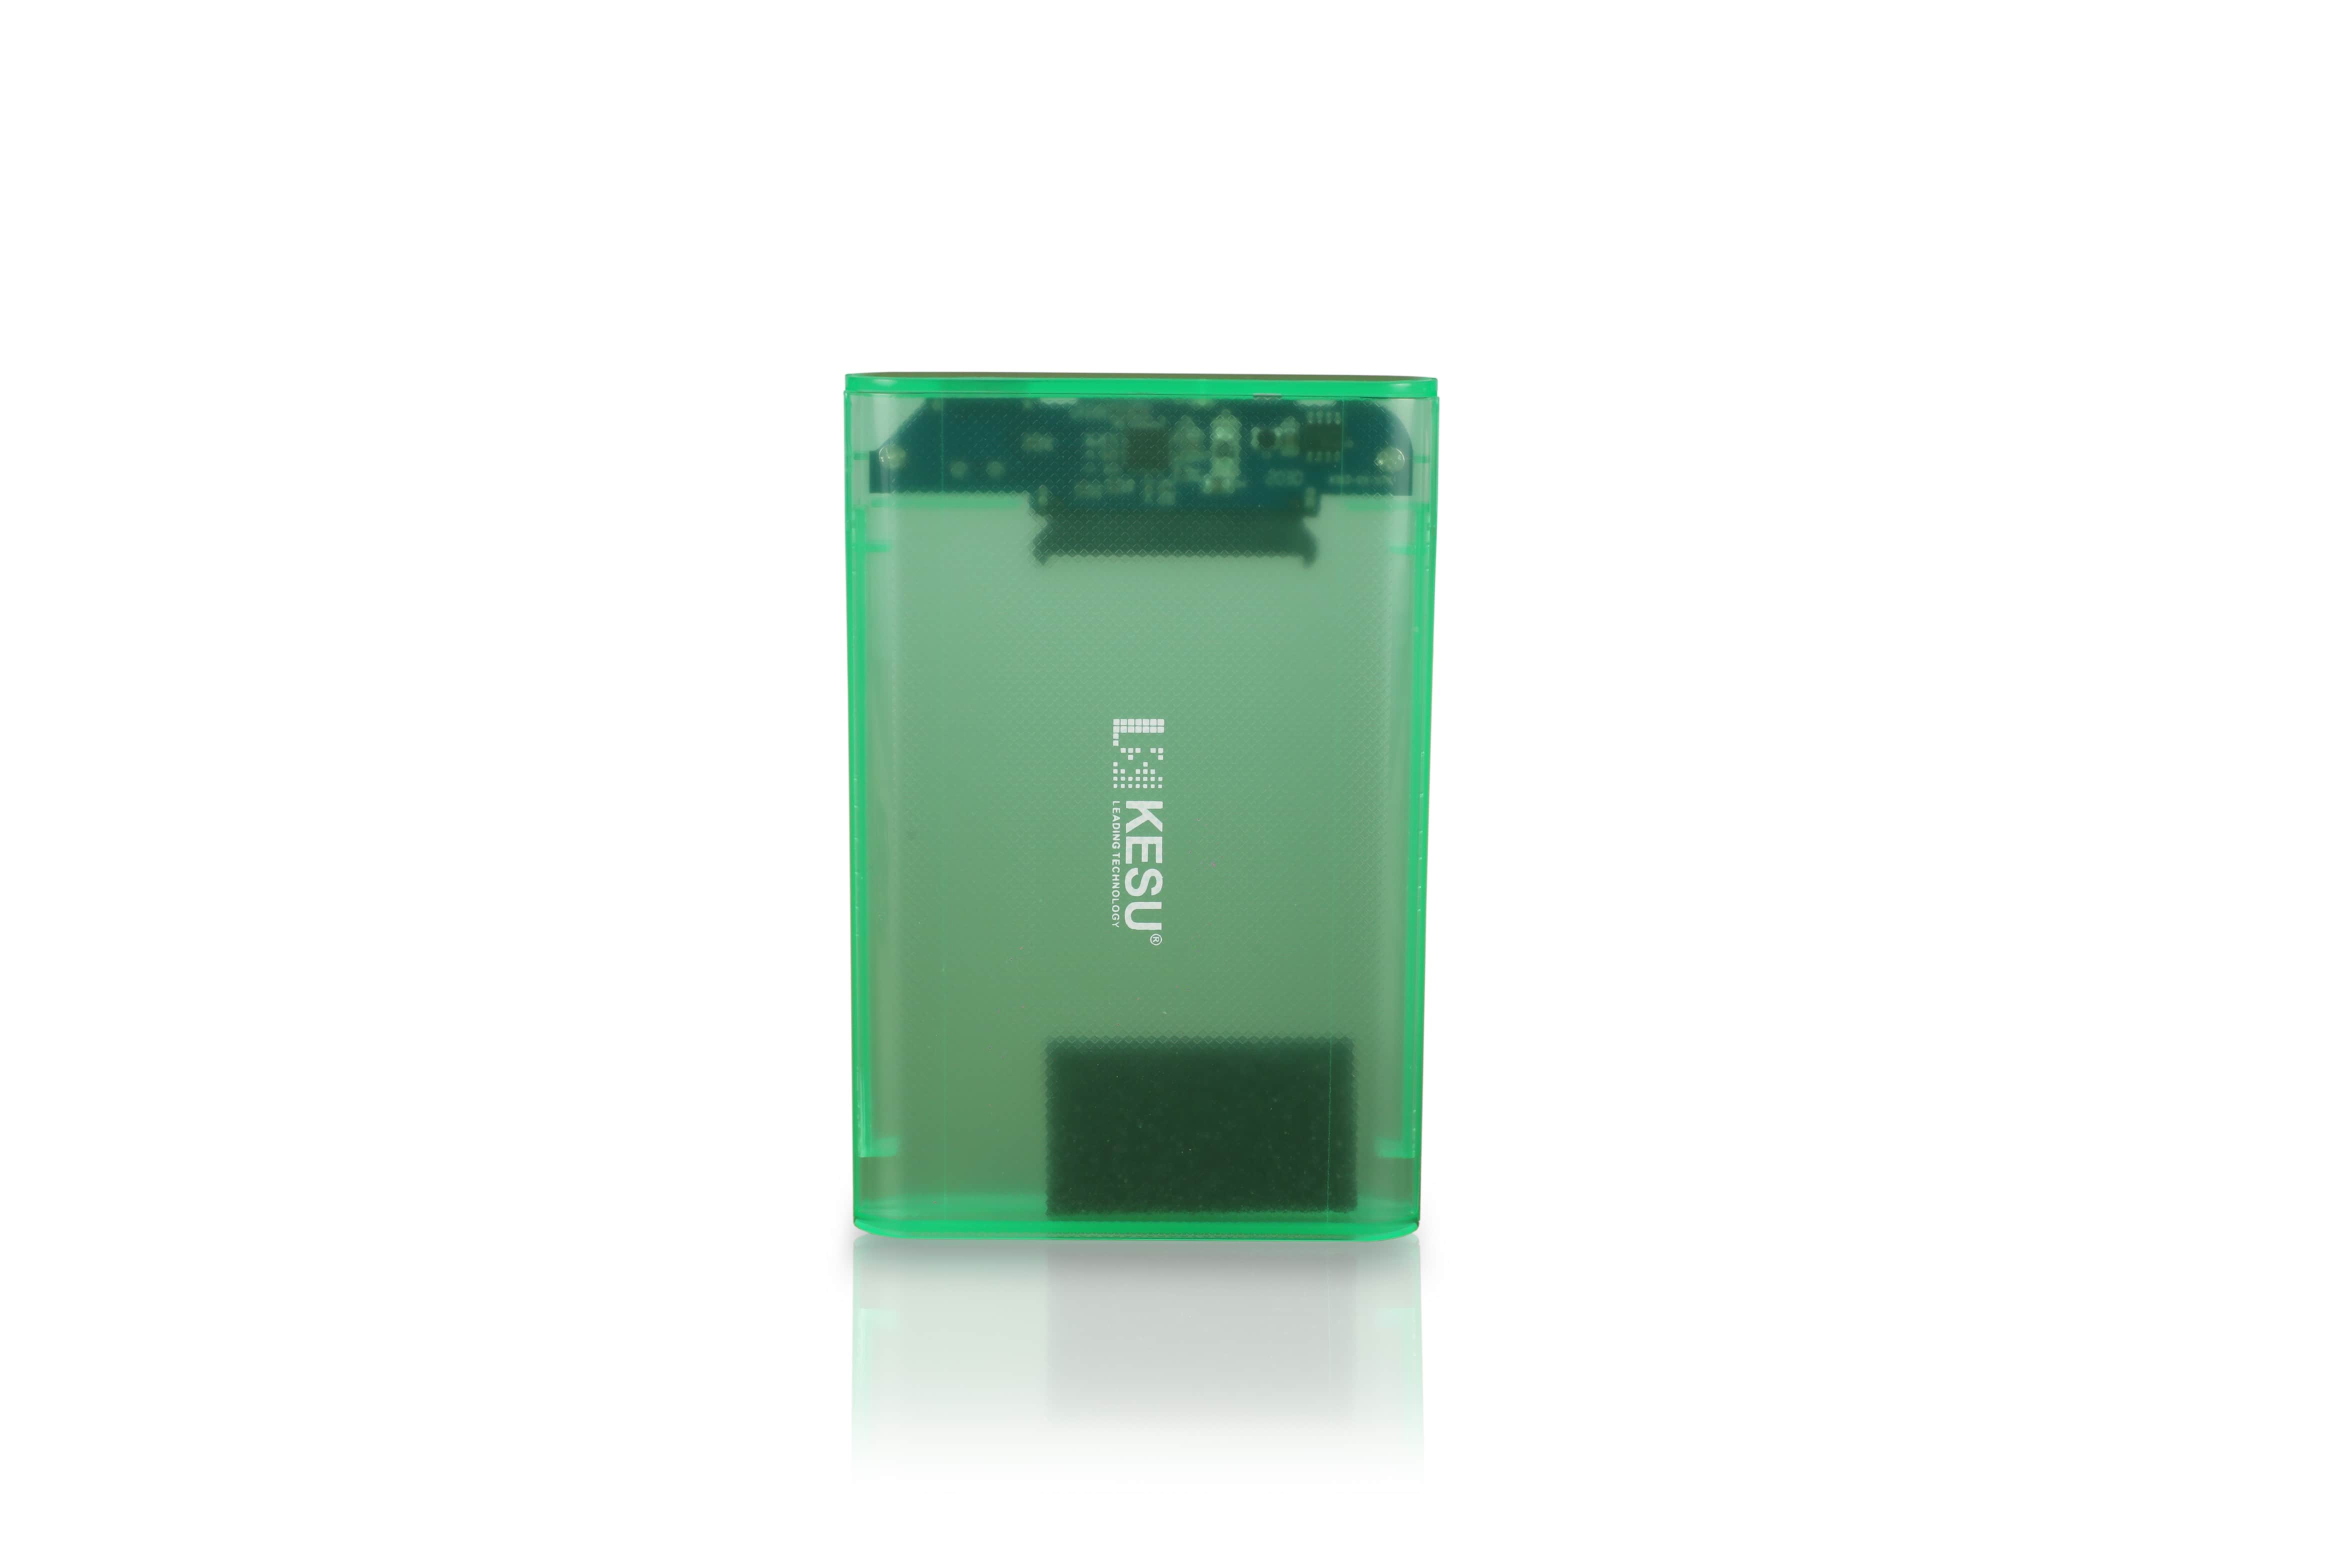 KESU CASING USB 3.0 K102A